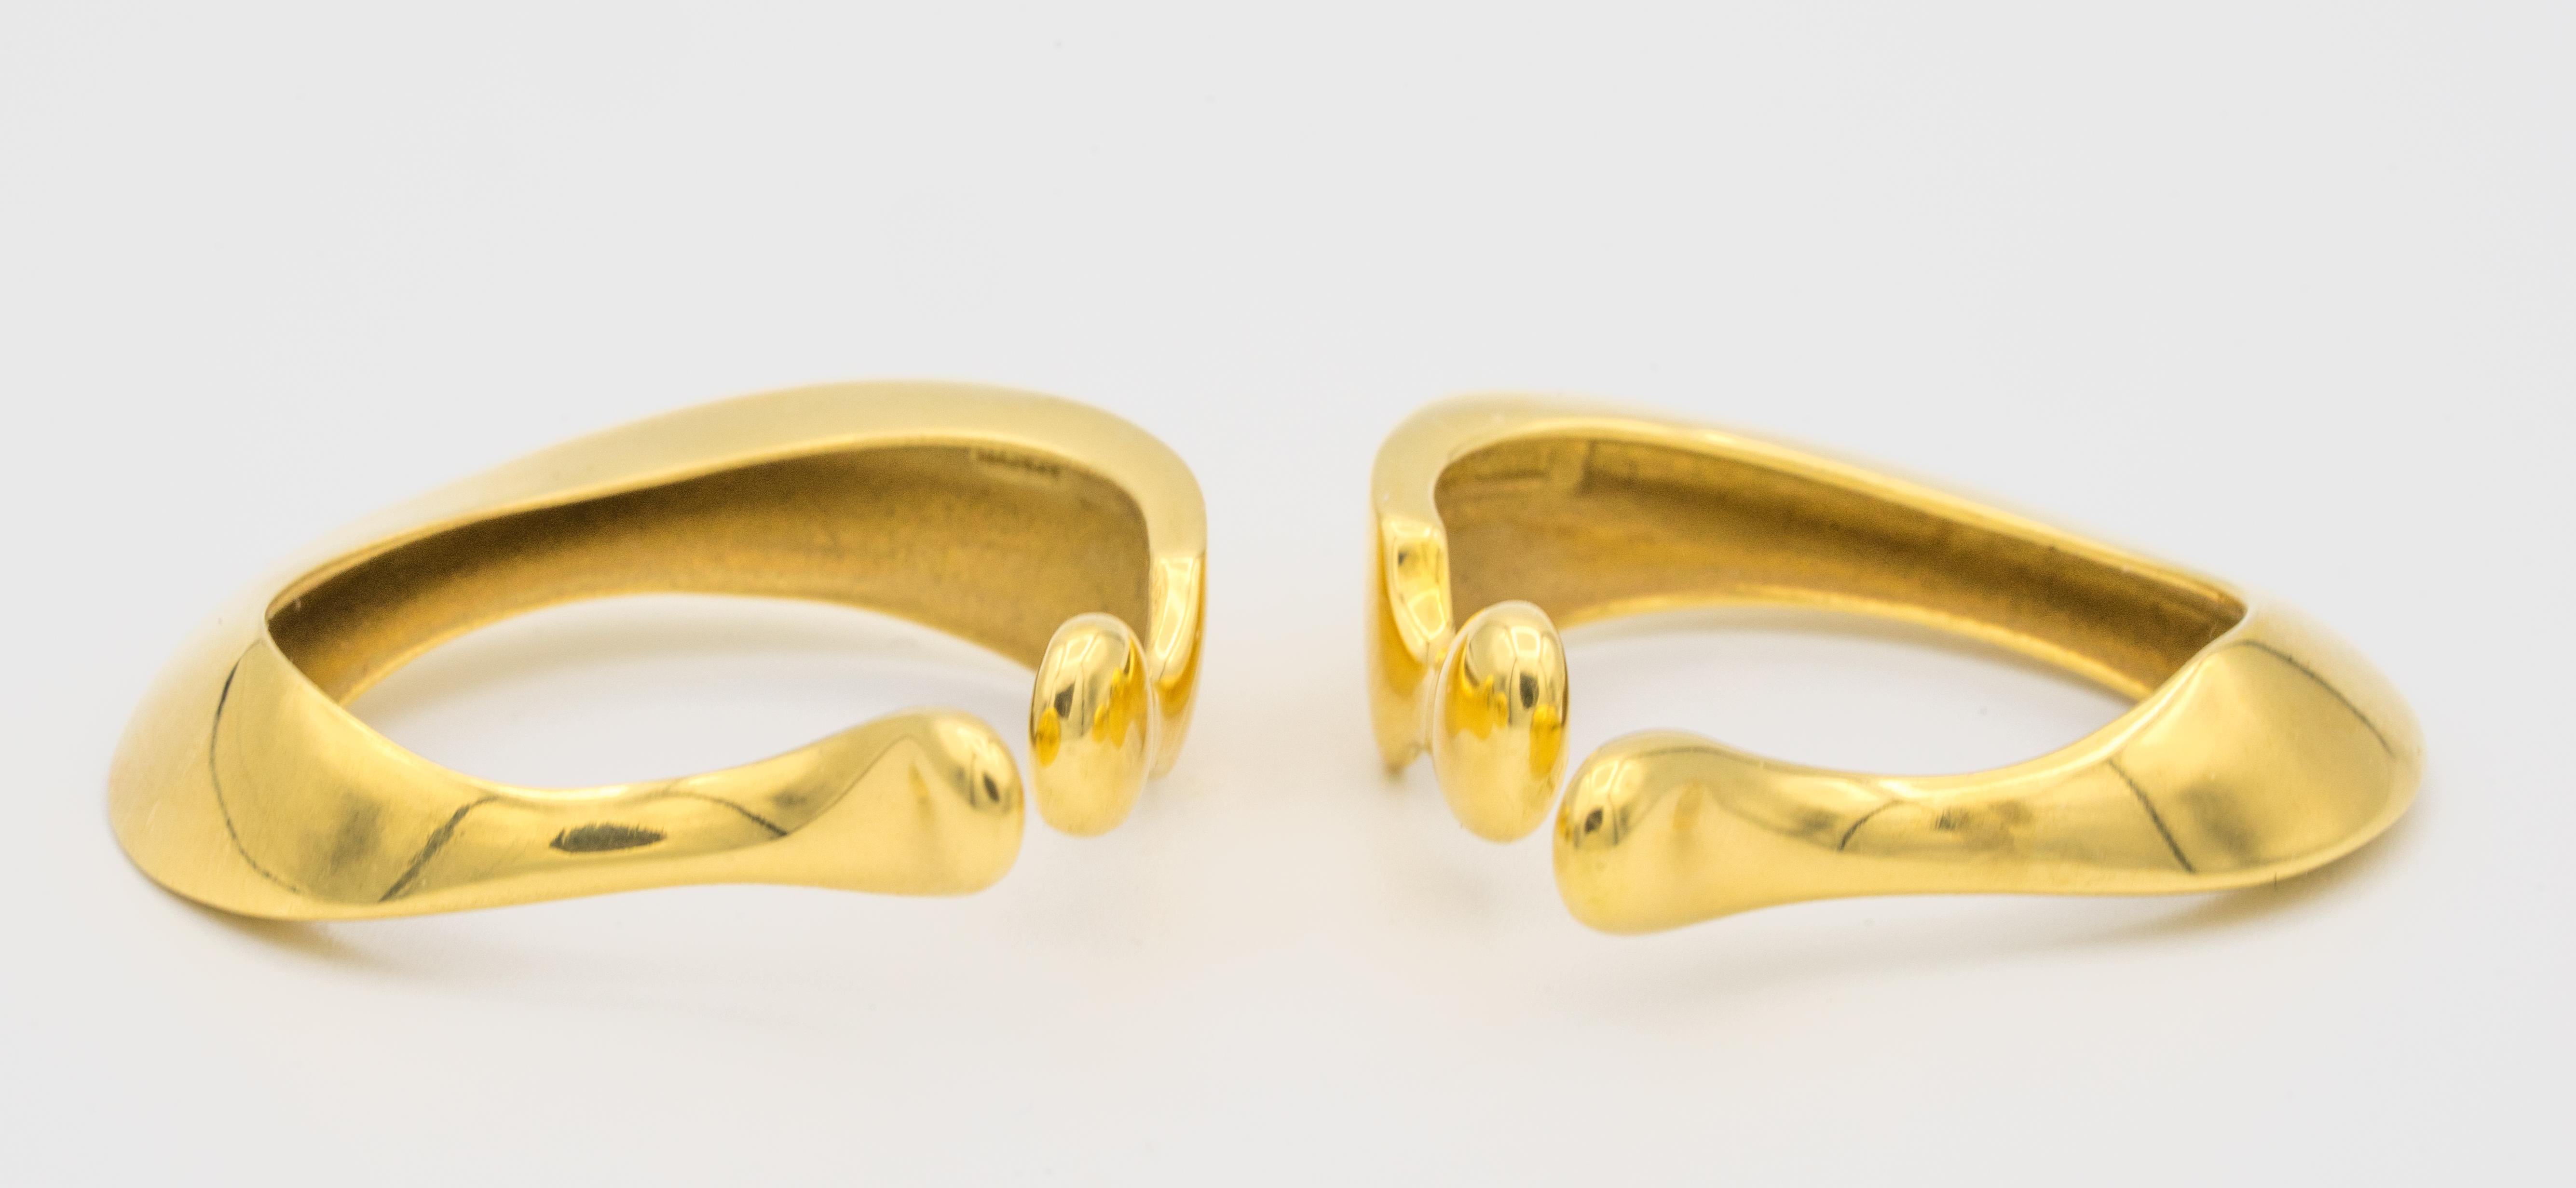 Tiffany & Co. Elsa Peretti cuff earrings in 18 Karat yellow gold
Designer: Elsa Peretti for Tiffany & Co.
Metal: 18K Yellow Gold 
Measurements: 1.25 Inches High x 1.25 inches Wide
Weight: 18.1 Grams
Hallmark: TIFFANY & CO , PERETTI , 18K

Fits